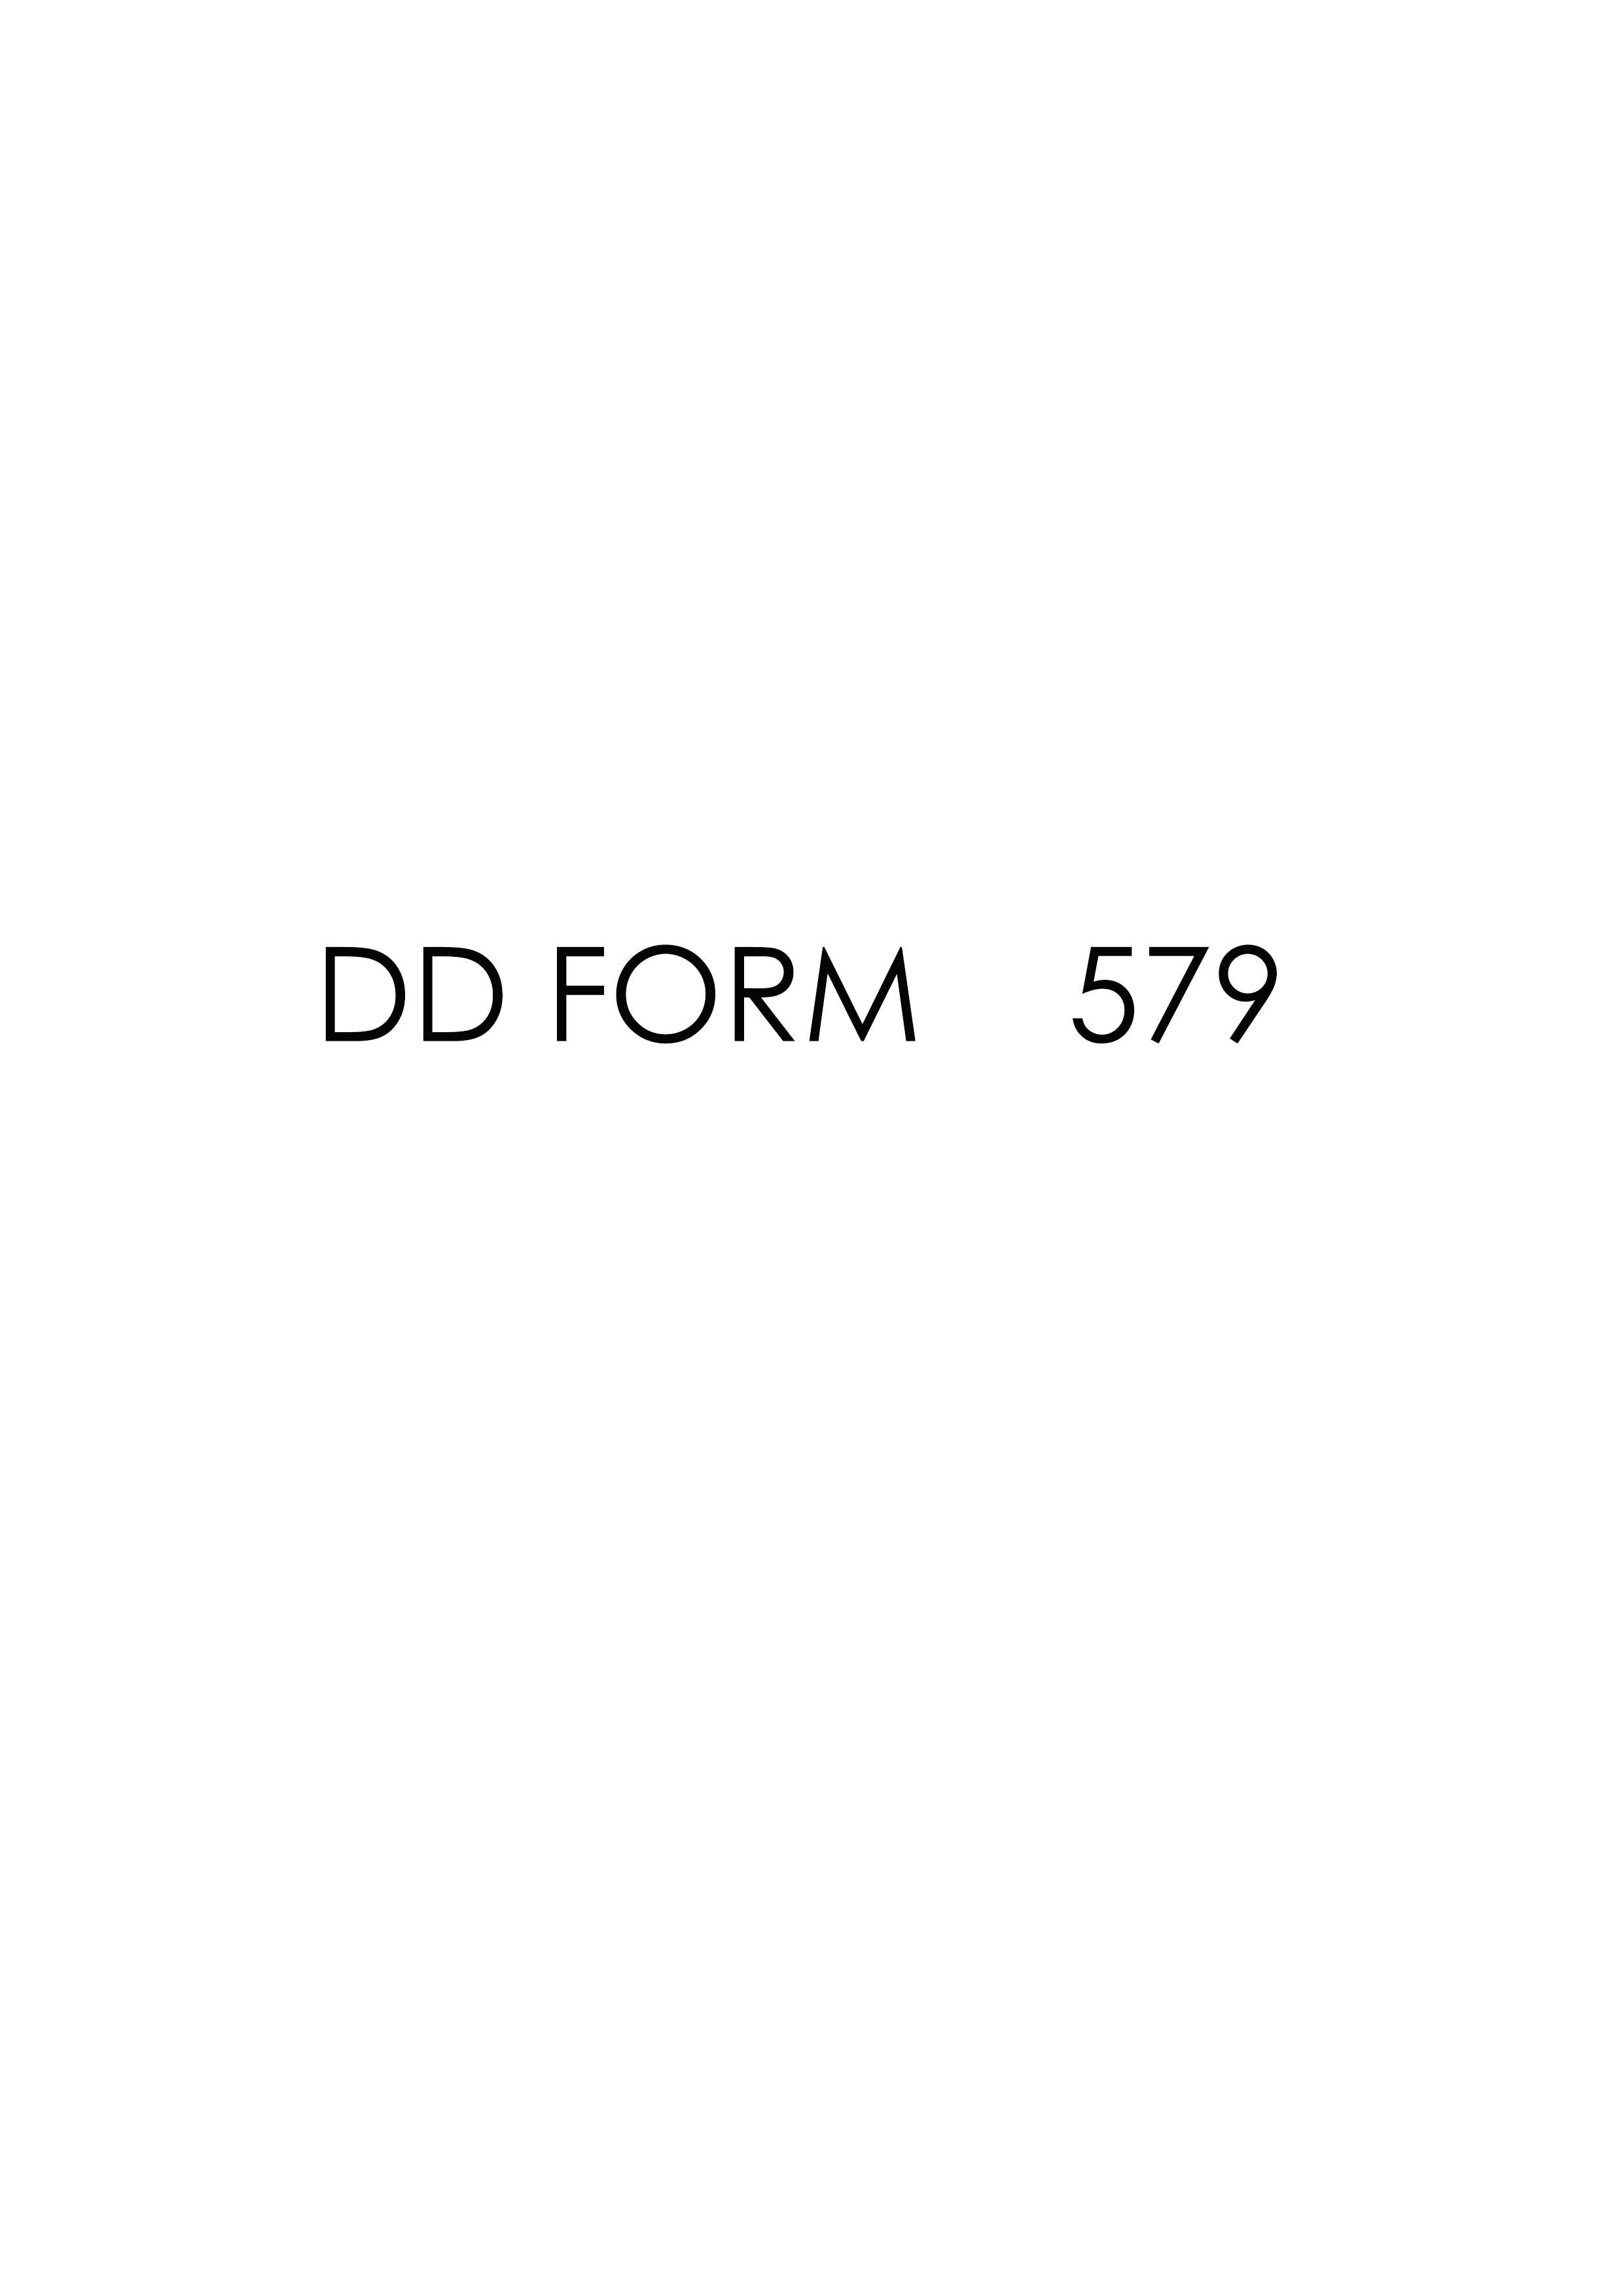 Download dd 579 Form